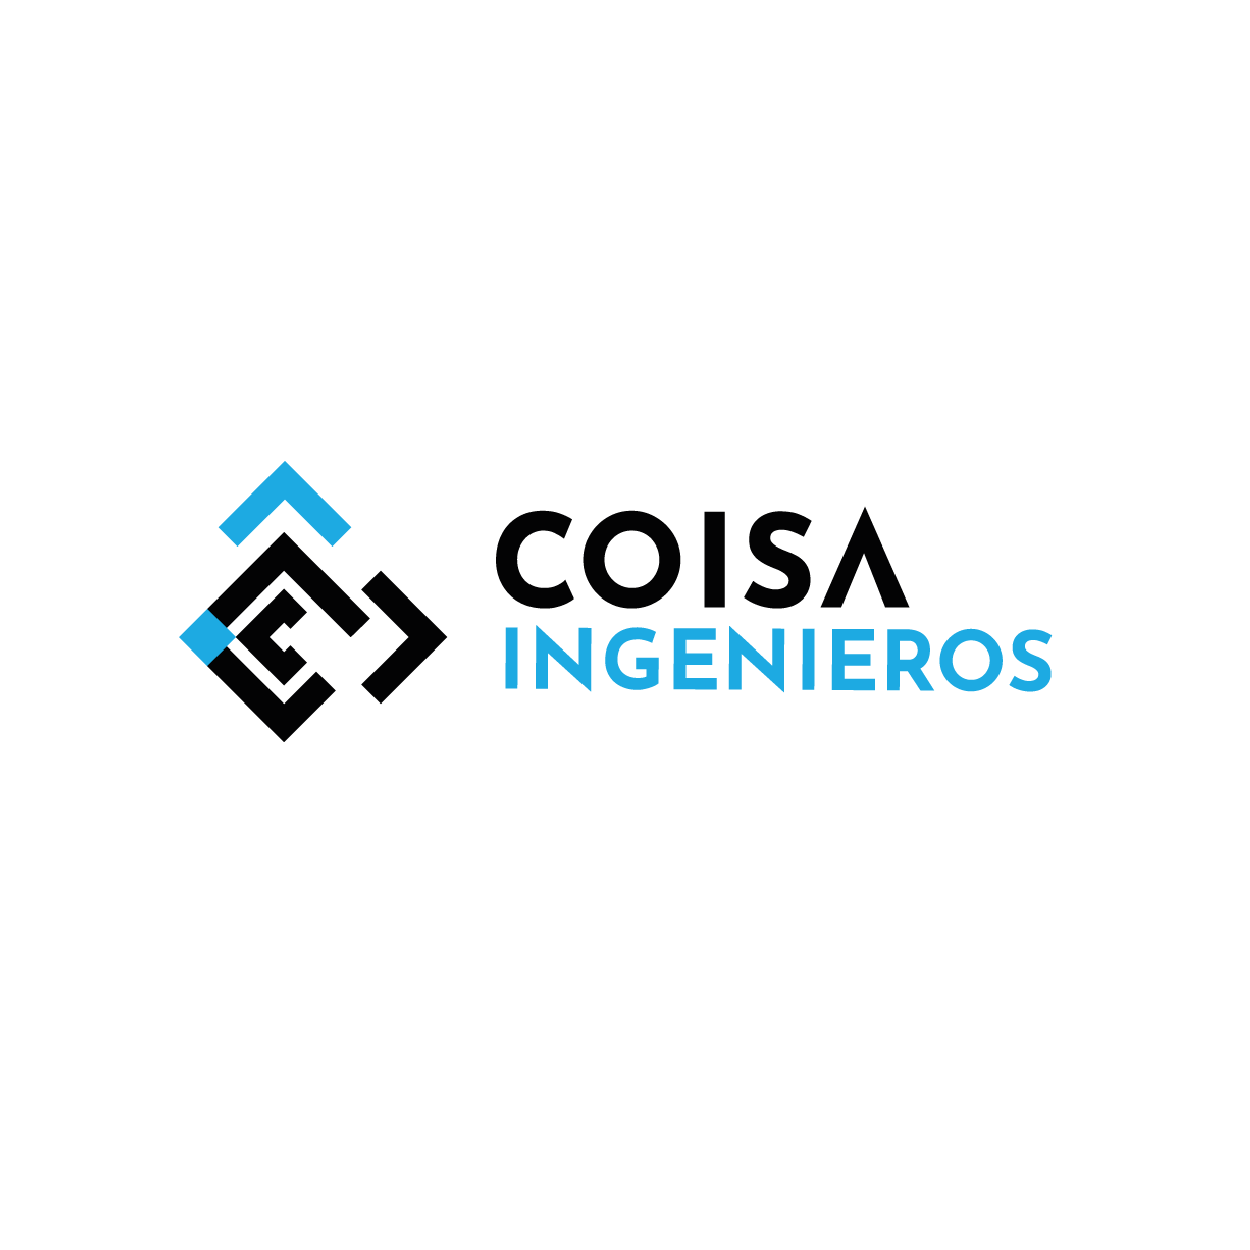 Diseño de Logotipo: Coisa Ingenieros - Logos Peru - Diseño de Logos - Agencia de diseño de Logos - Nombres para Restaurantes Peruanos - logos de constructoras - logo de empresas constructoras - diseño de logotipos en lima